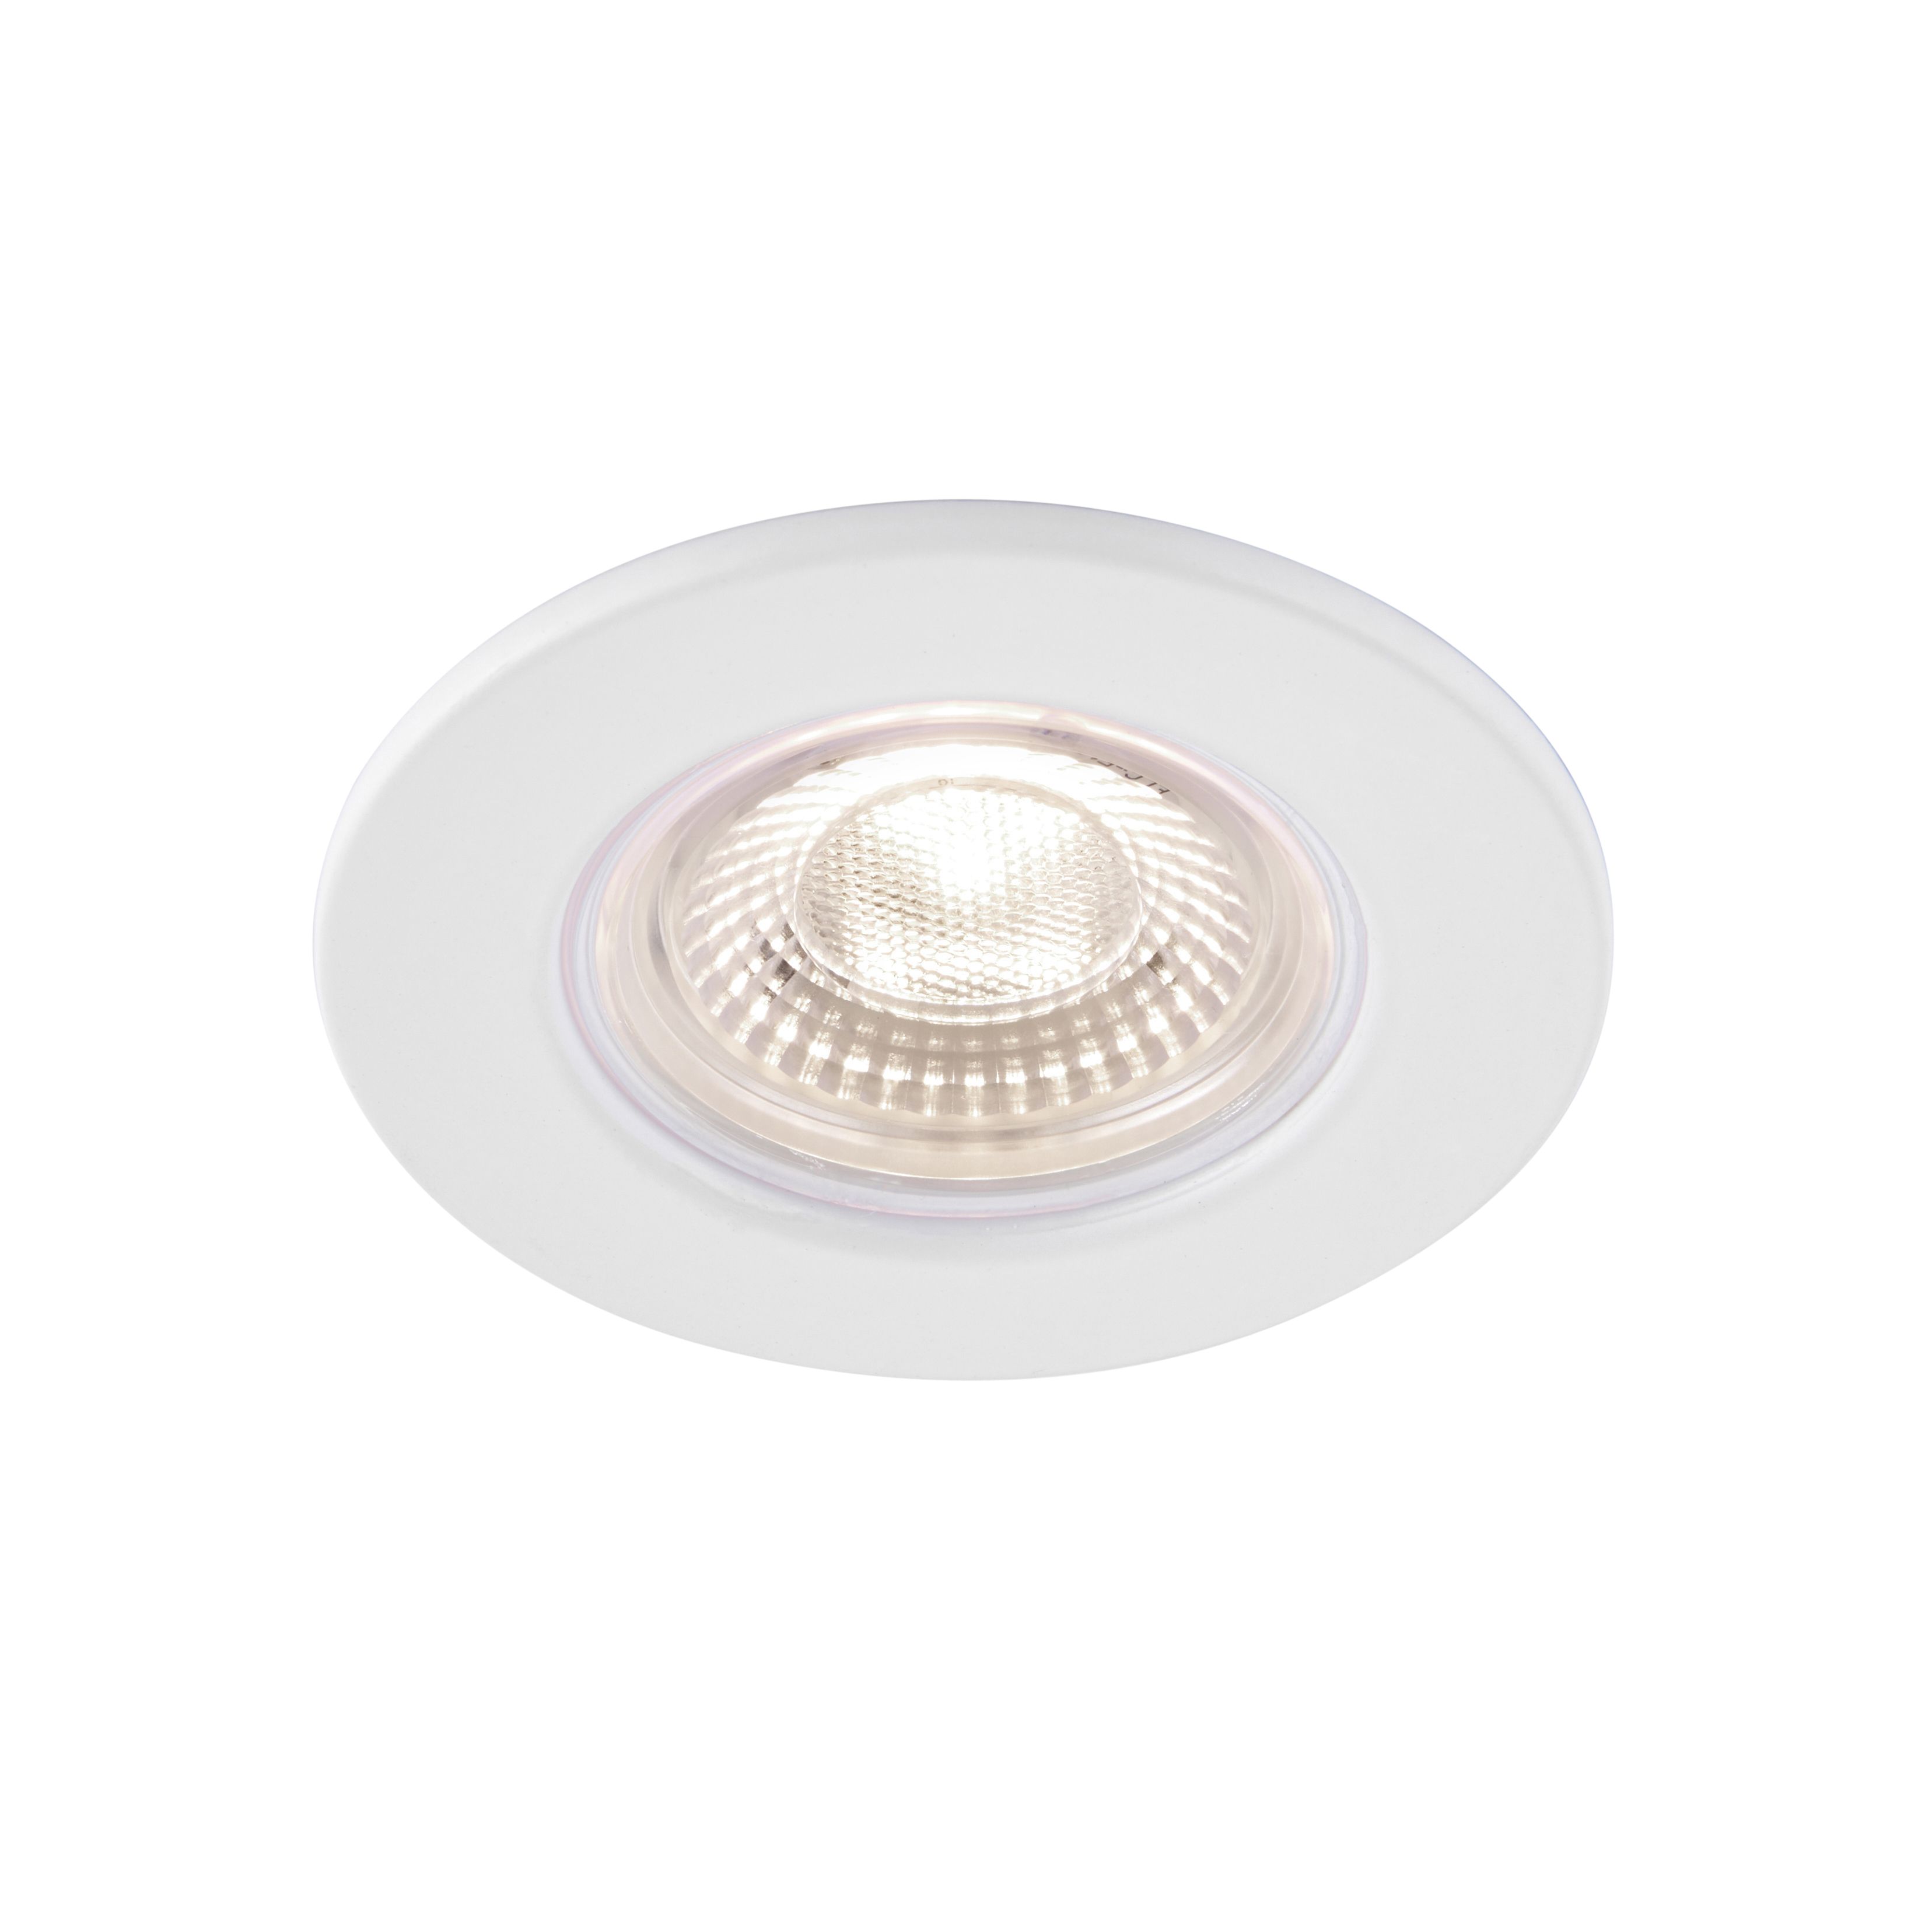 GuardECO White Non-adjustable LED Cool white Downlight 6W IP65